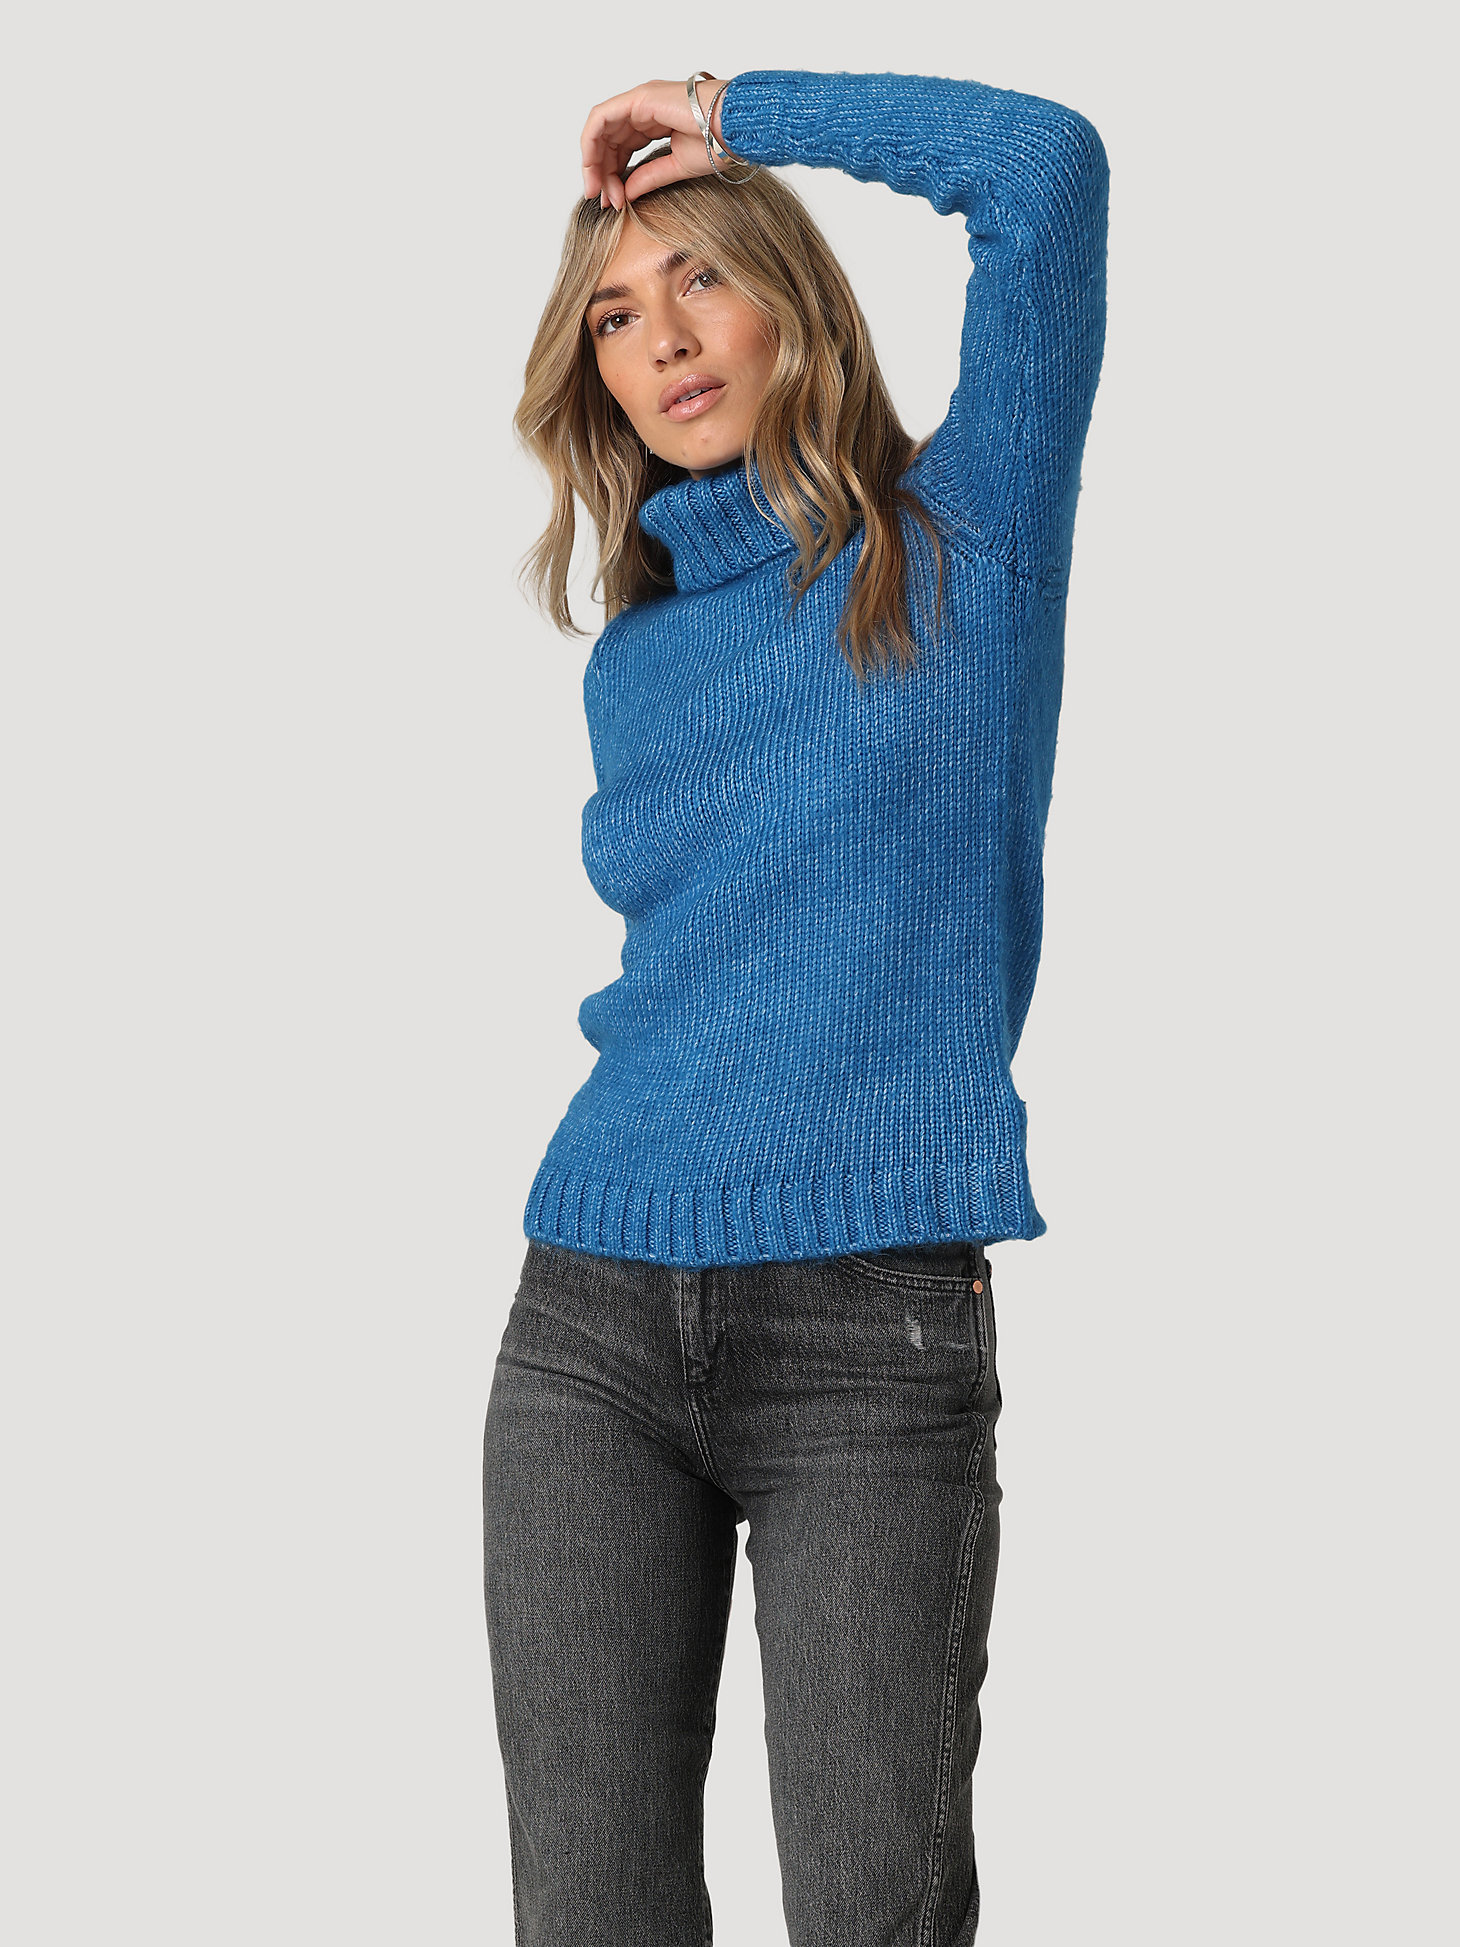 Women's Plush Sweater in Daphne Blue alternative view 3